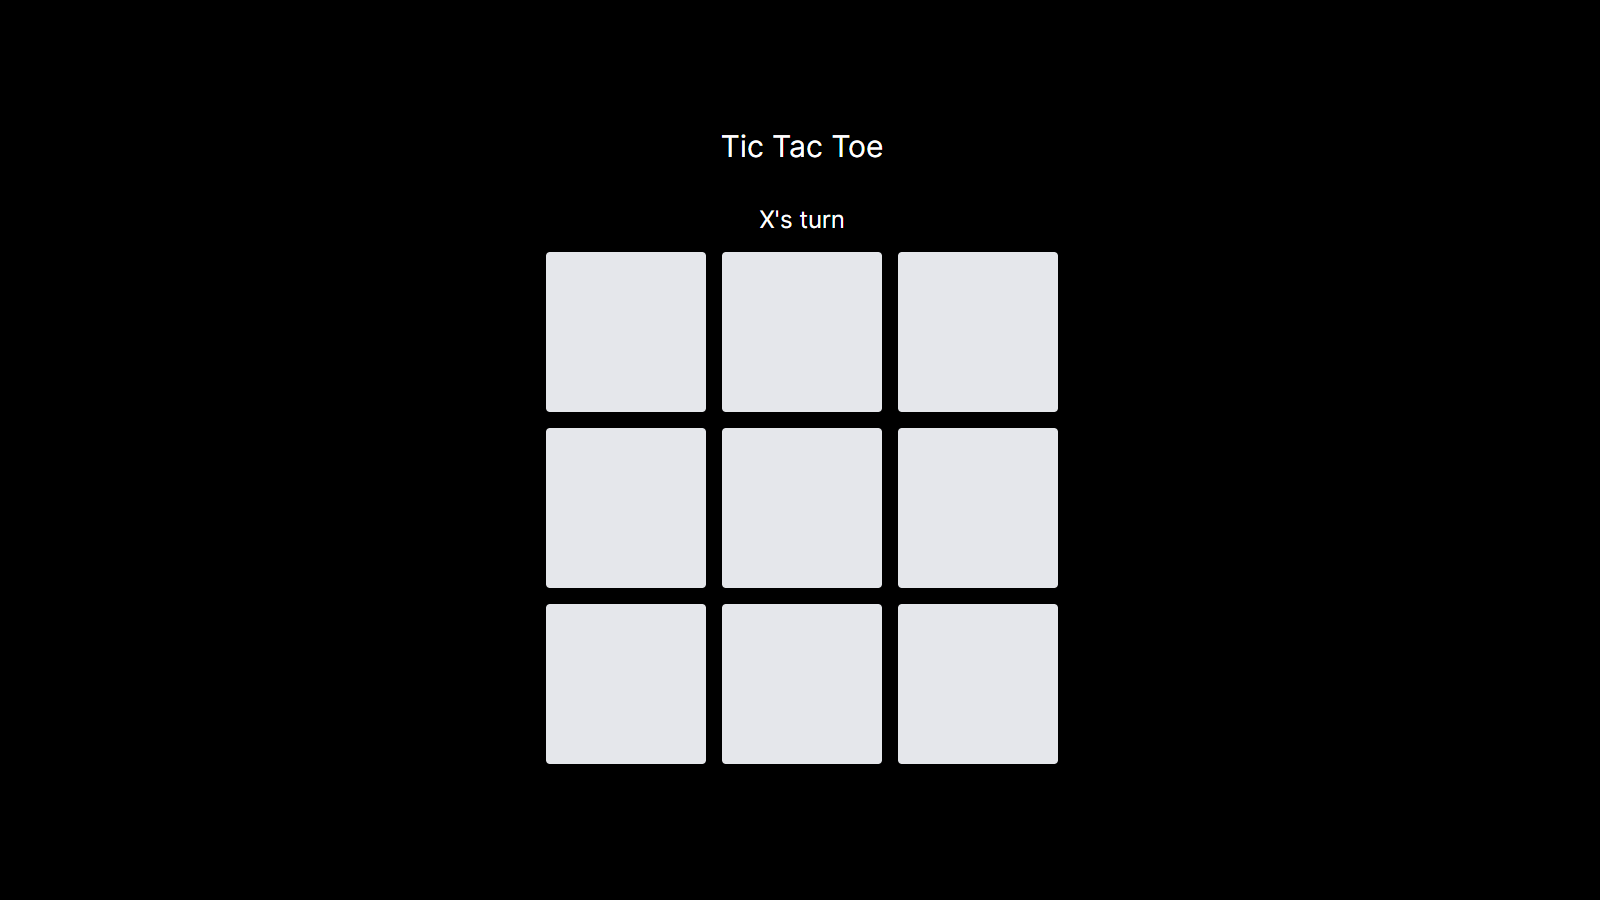 A simple Tic Tac Toe application